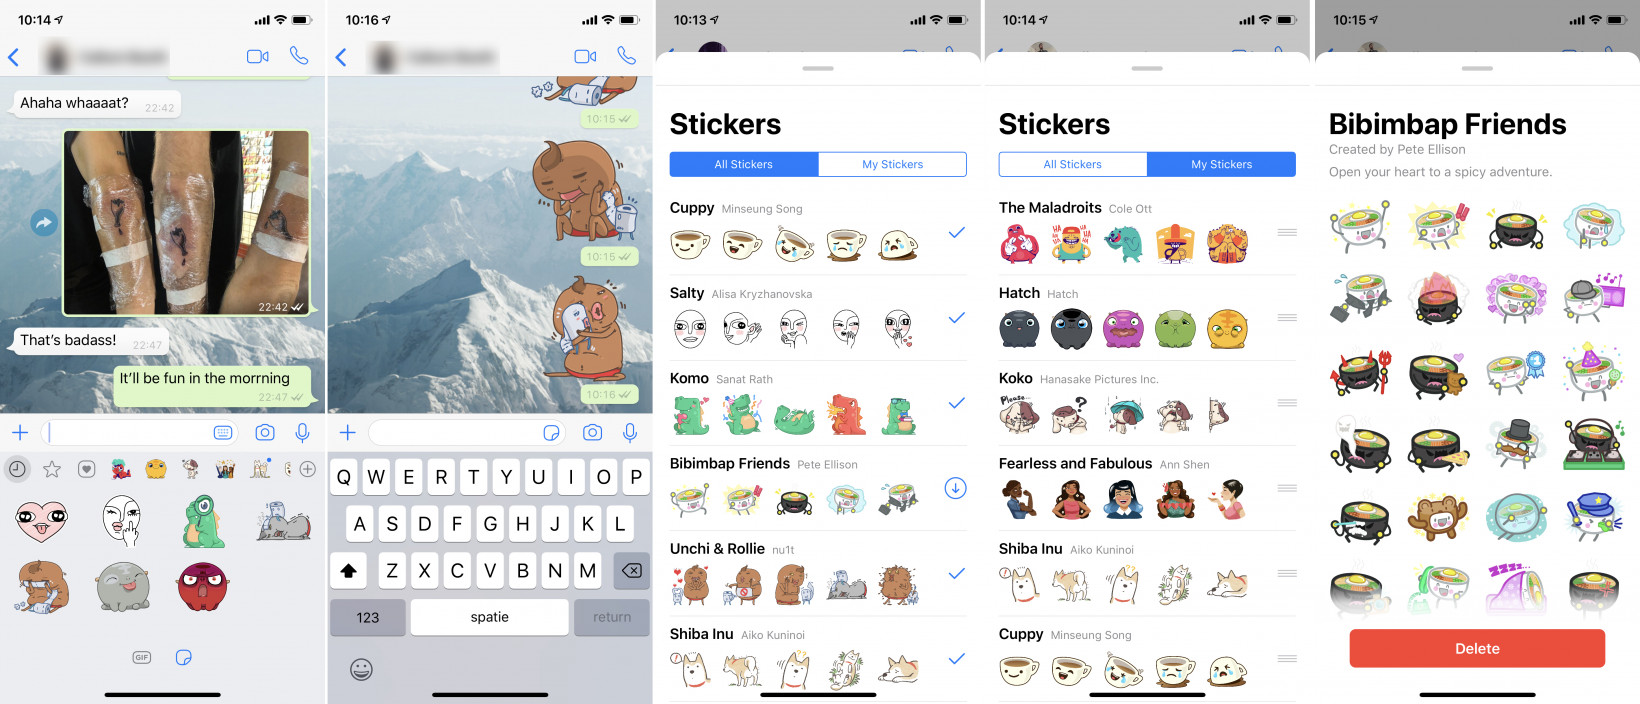 Whatsapp Introduces Stickers At Last The Next Web Jishuwen